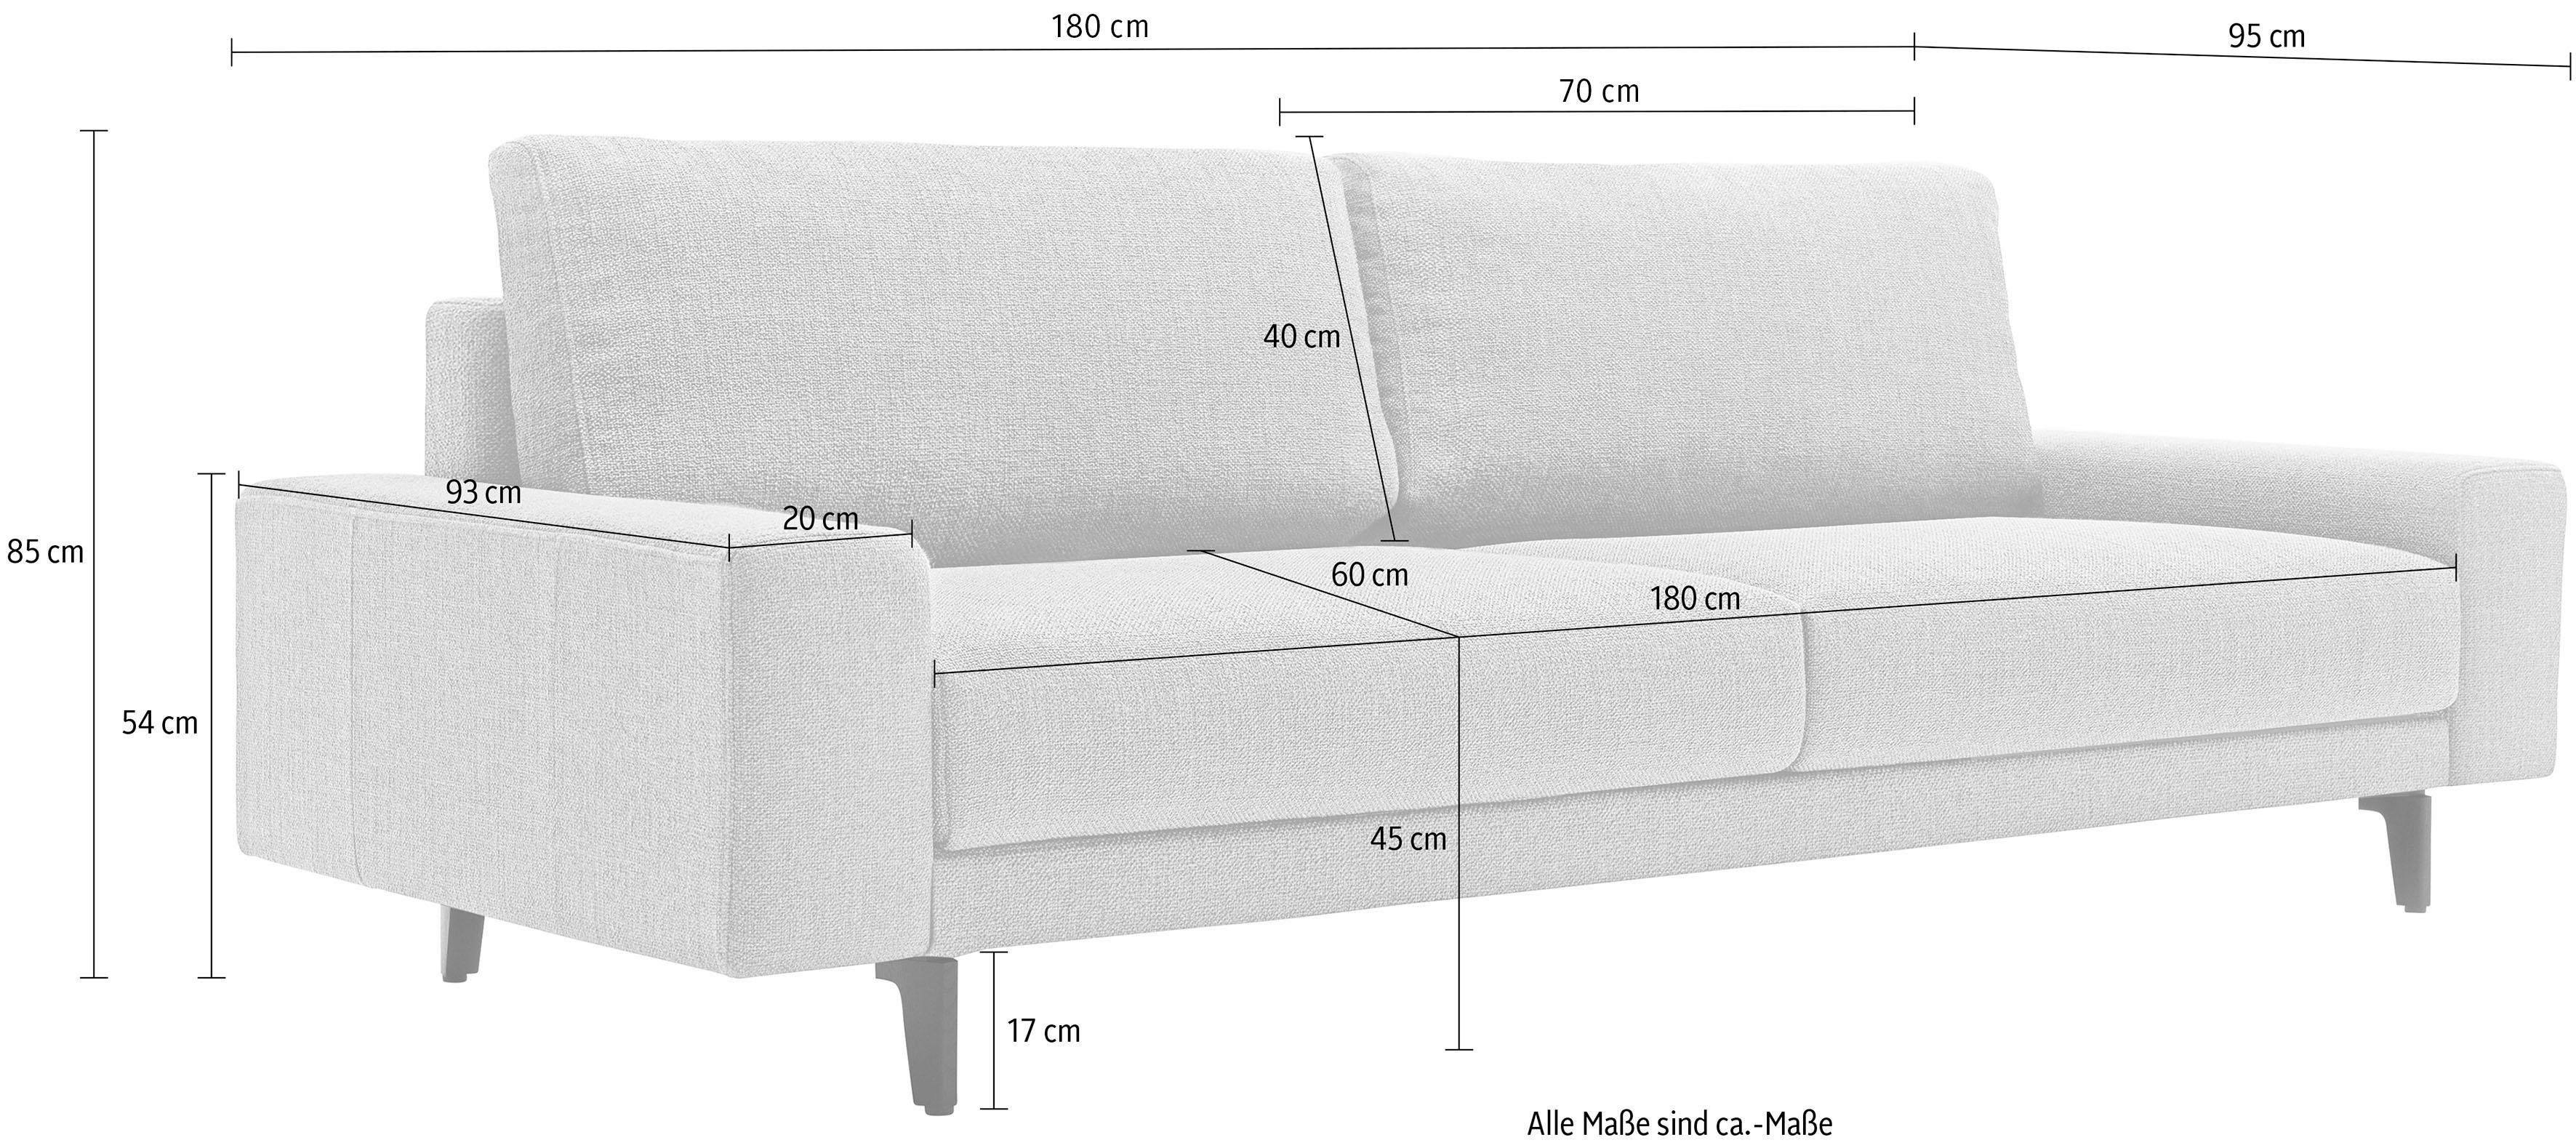 Alugussfüße sofa Breite hülsta cm Armlehne hs.450, 2-Sitzer in breit 180 niedrig, umbragrau,